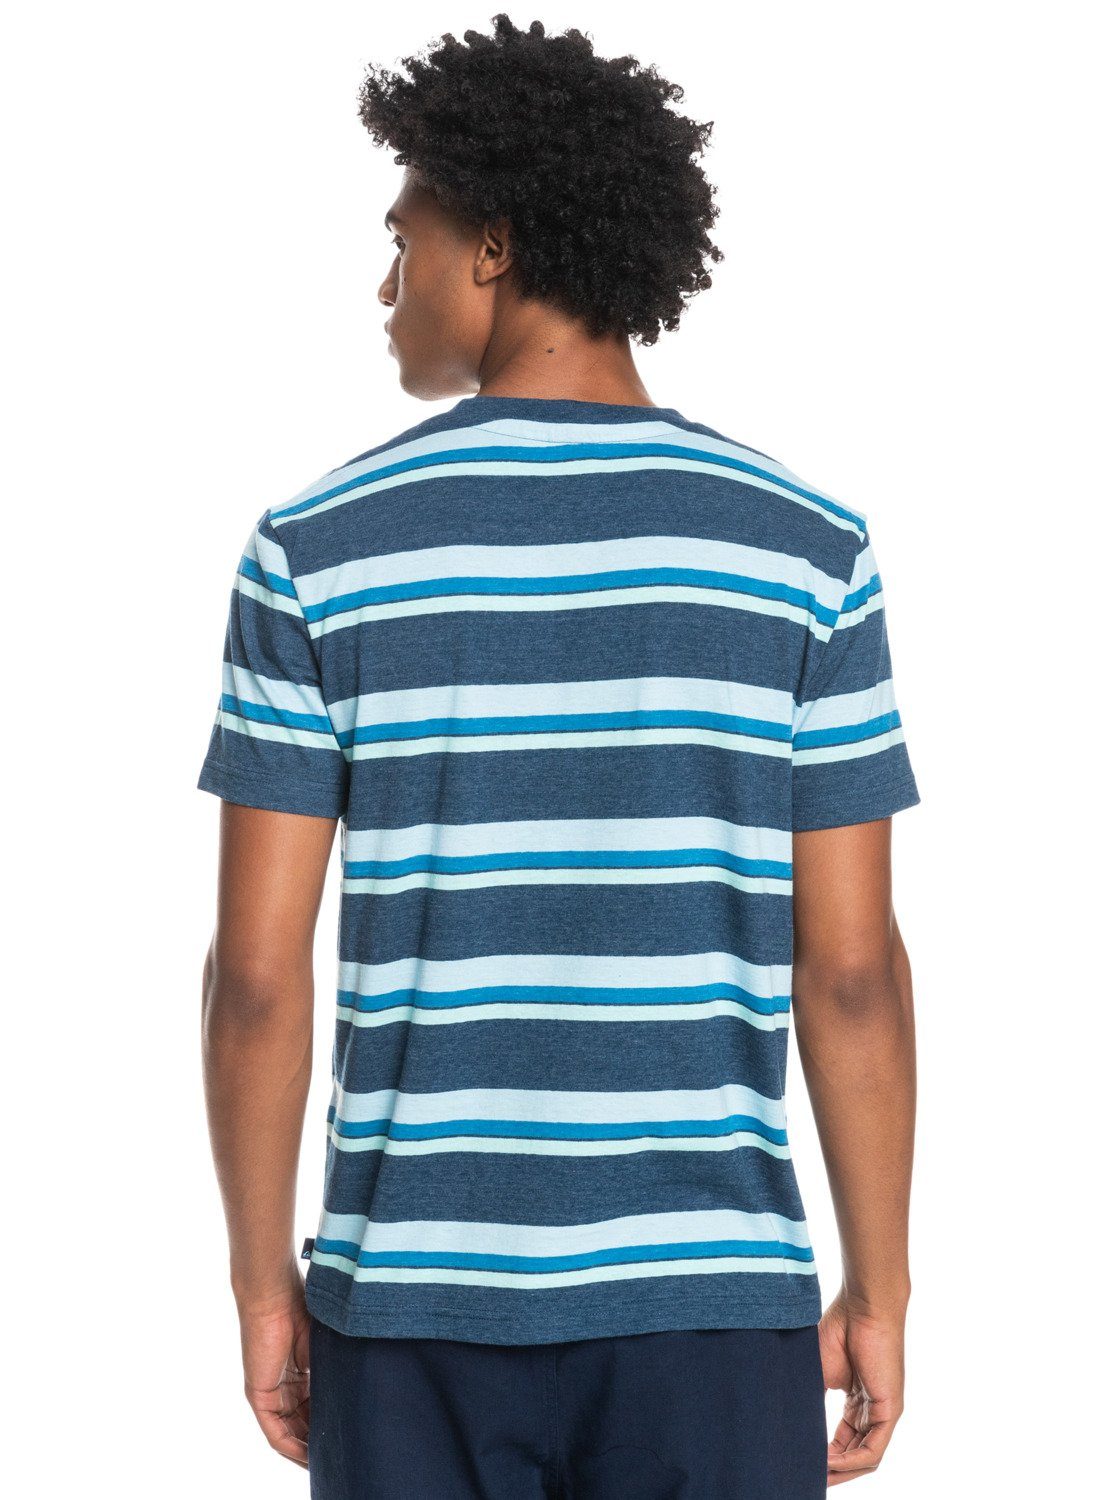 Quiksilver T-Shirt Between Waves Insignia Waves Between Blue